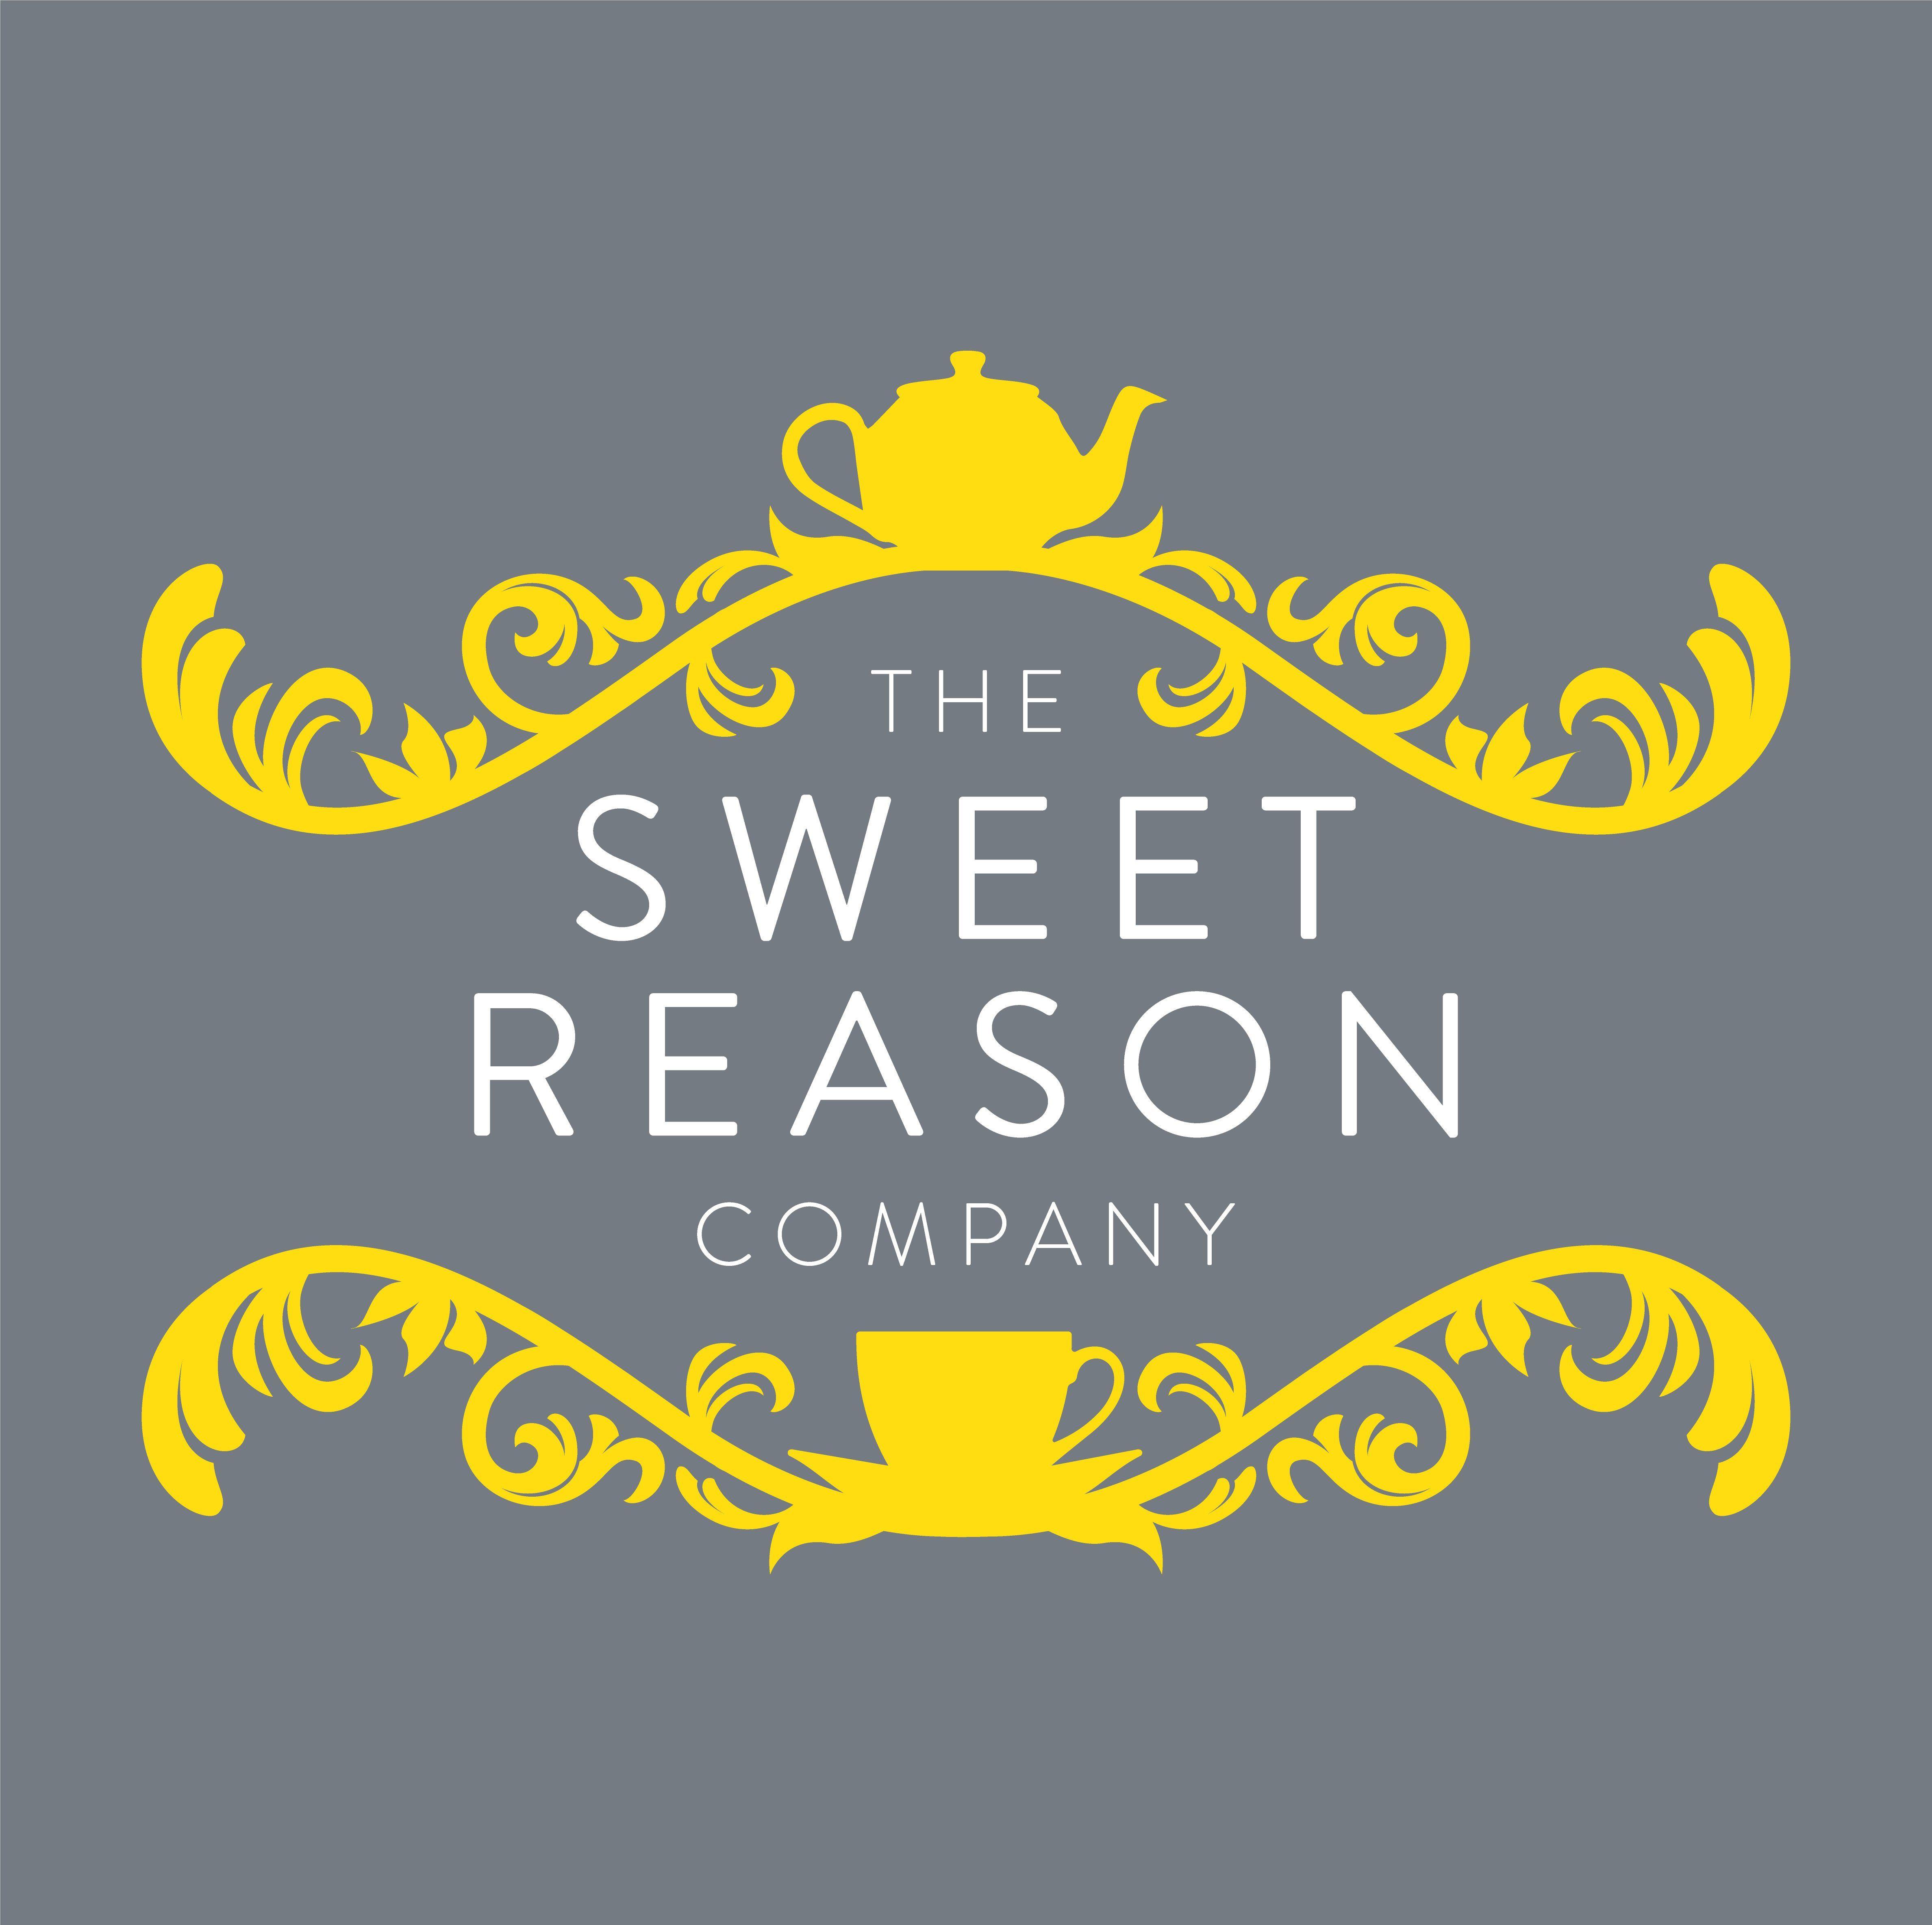 Reason.com Logo - About Us | The Sweet Reason Company